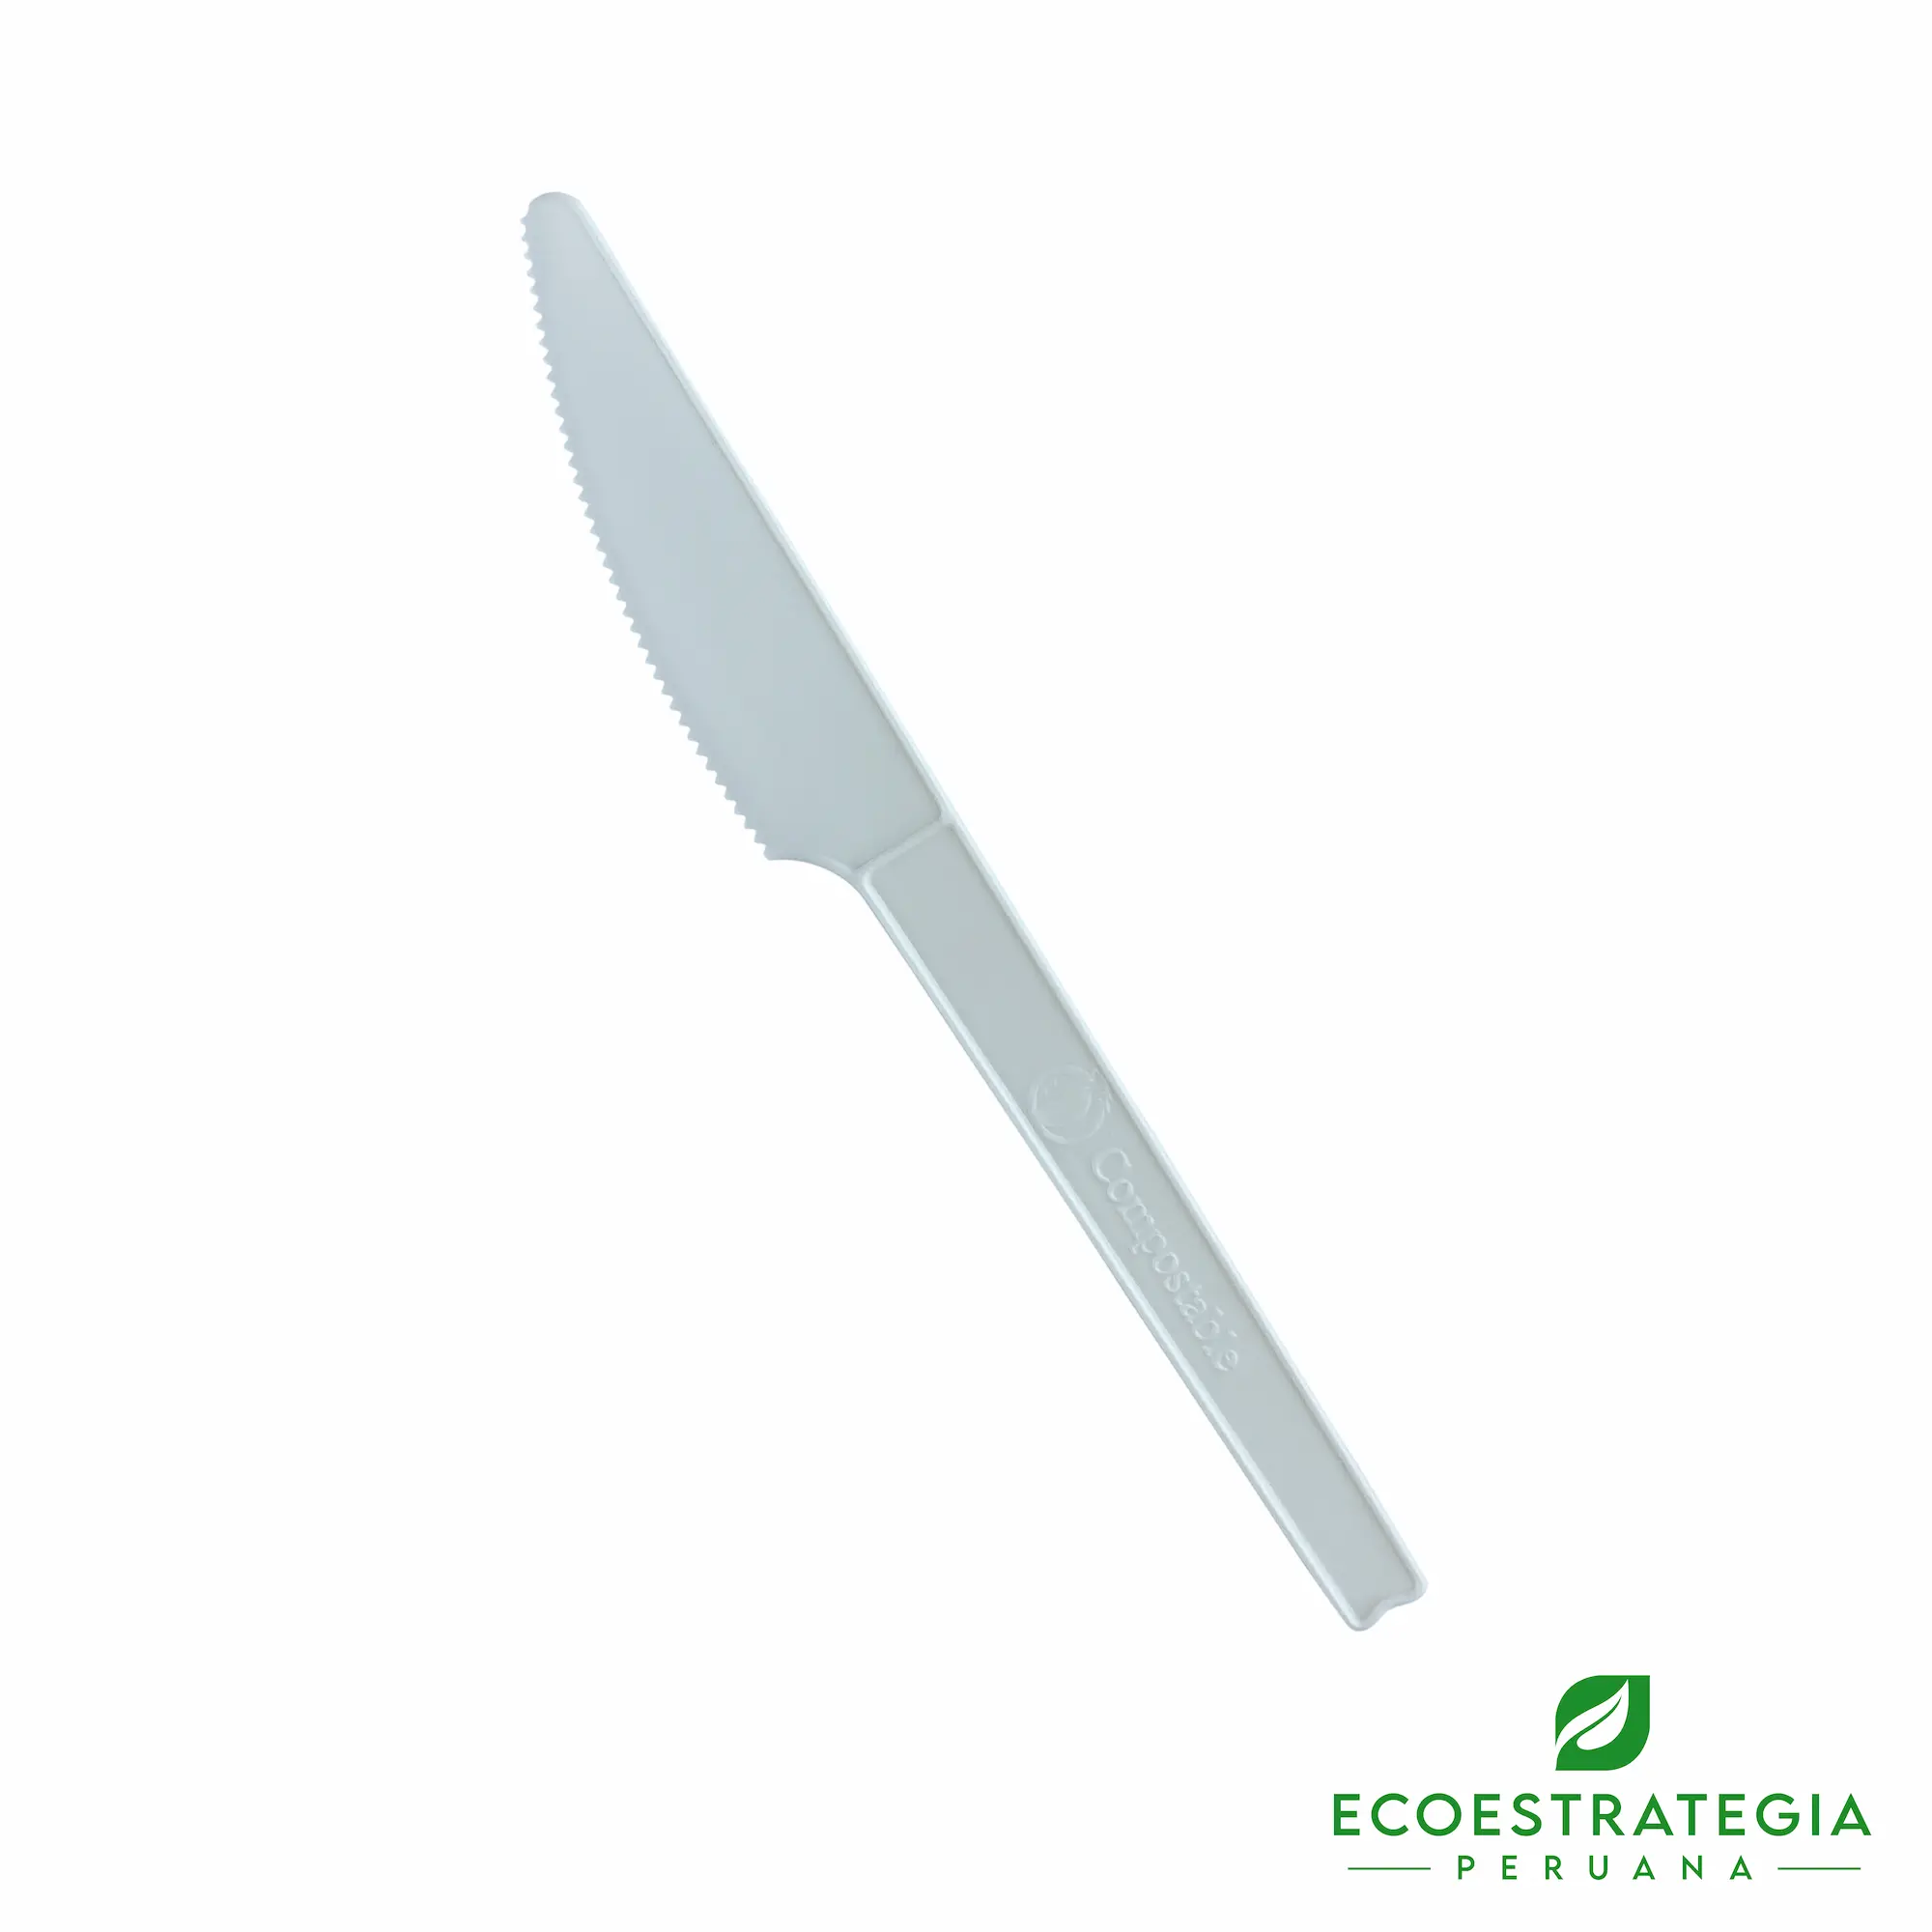 Cubiertos biodegradables EP-L conocido también como cubierto biodegradable, cubierto ecologico, cubierto reciclable. cubierto helados, cubierto postres, cubierto menu, cuchillo biodegradable 15 cm, cuchillo biodegradable, cuchillos compostables, cuchillos eco 16 fibra de maíz, cuchillo biodegradable blanco 6”, cuchillo, cuchillo biodegradable cubierto, productos compostables, cuchillo descartable biodegradable, cubiertos compostables, set de cubiertos eco, cuchillos ecológicos, cubiertos biodegradables, cuchillo blanco biodegradable, cuchillo para delivery, cuchillos biodegradables peru, importadores de cuchillos cubiertos biodegradables, mayoristas de cuchillos cubiertos biodegradables, distribuidores de cuchillos cubiertos biodegradables